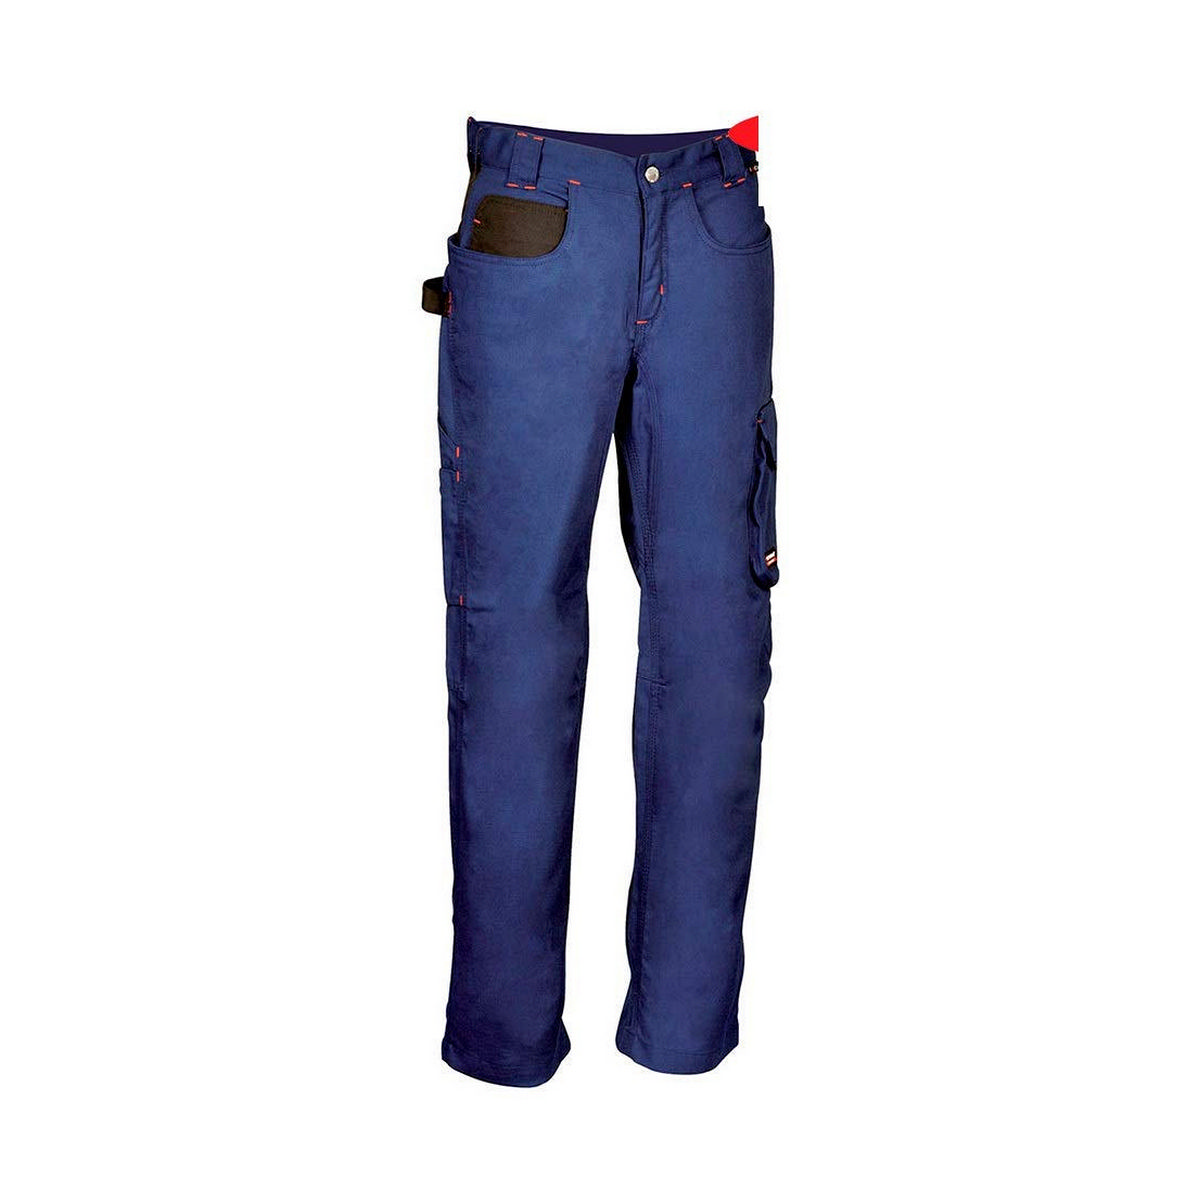 Pantaloni de siguranță Cofra Walklander Femeie Negru Bleumarin - Mărime 36